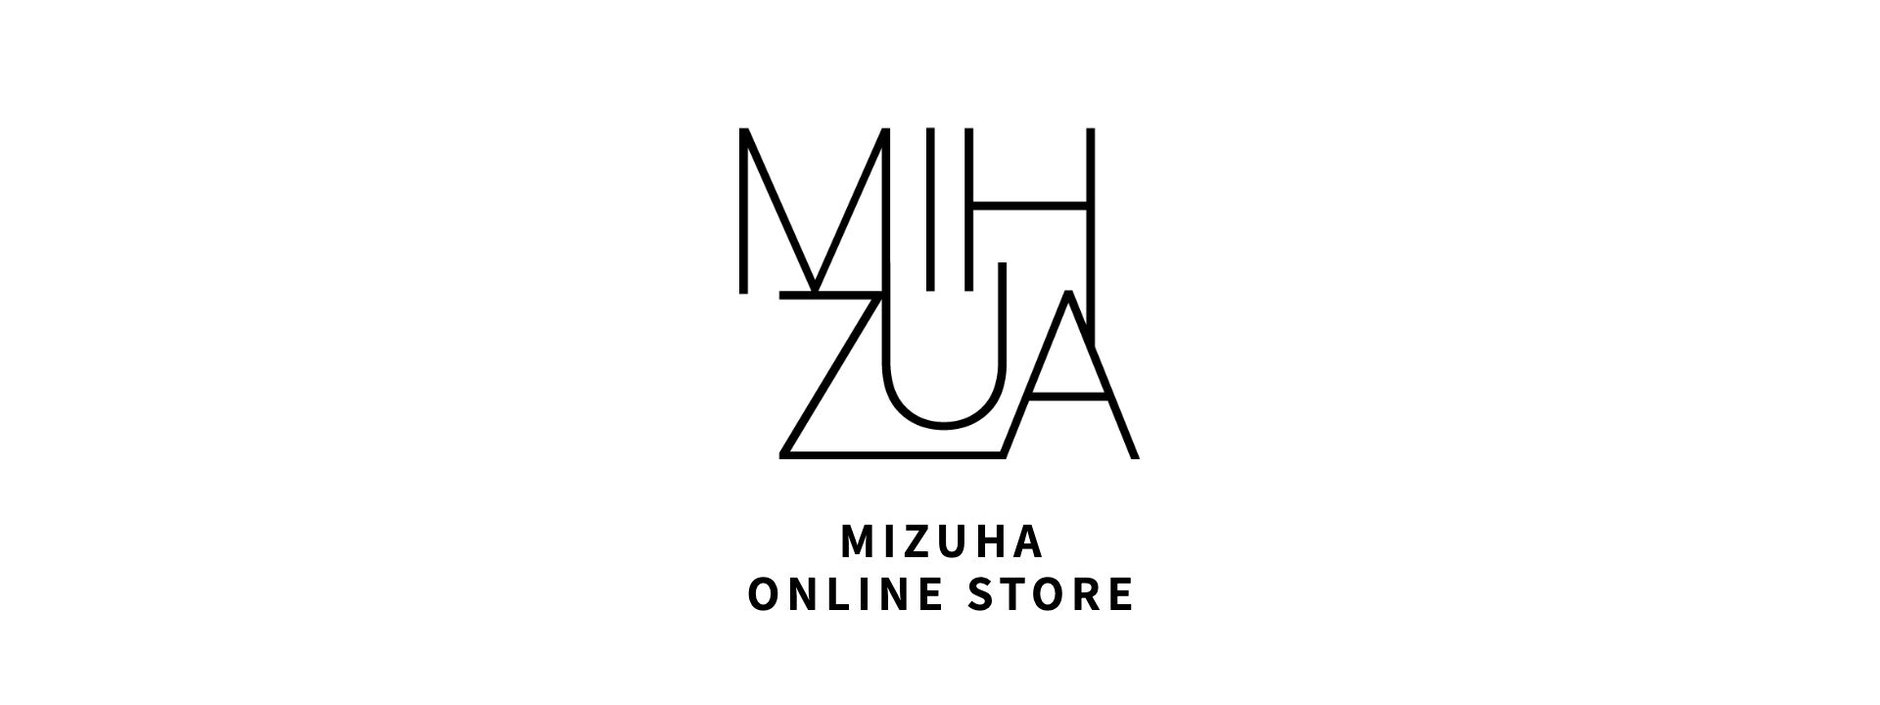 MIZUHA ONLINE STORE